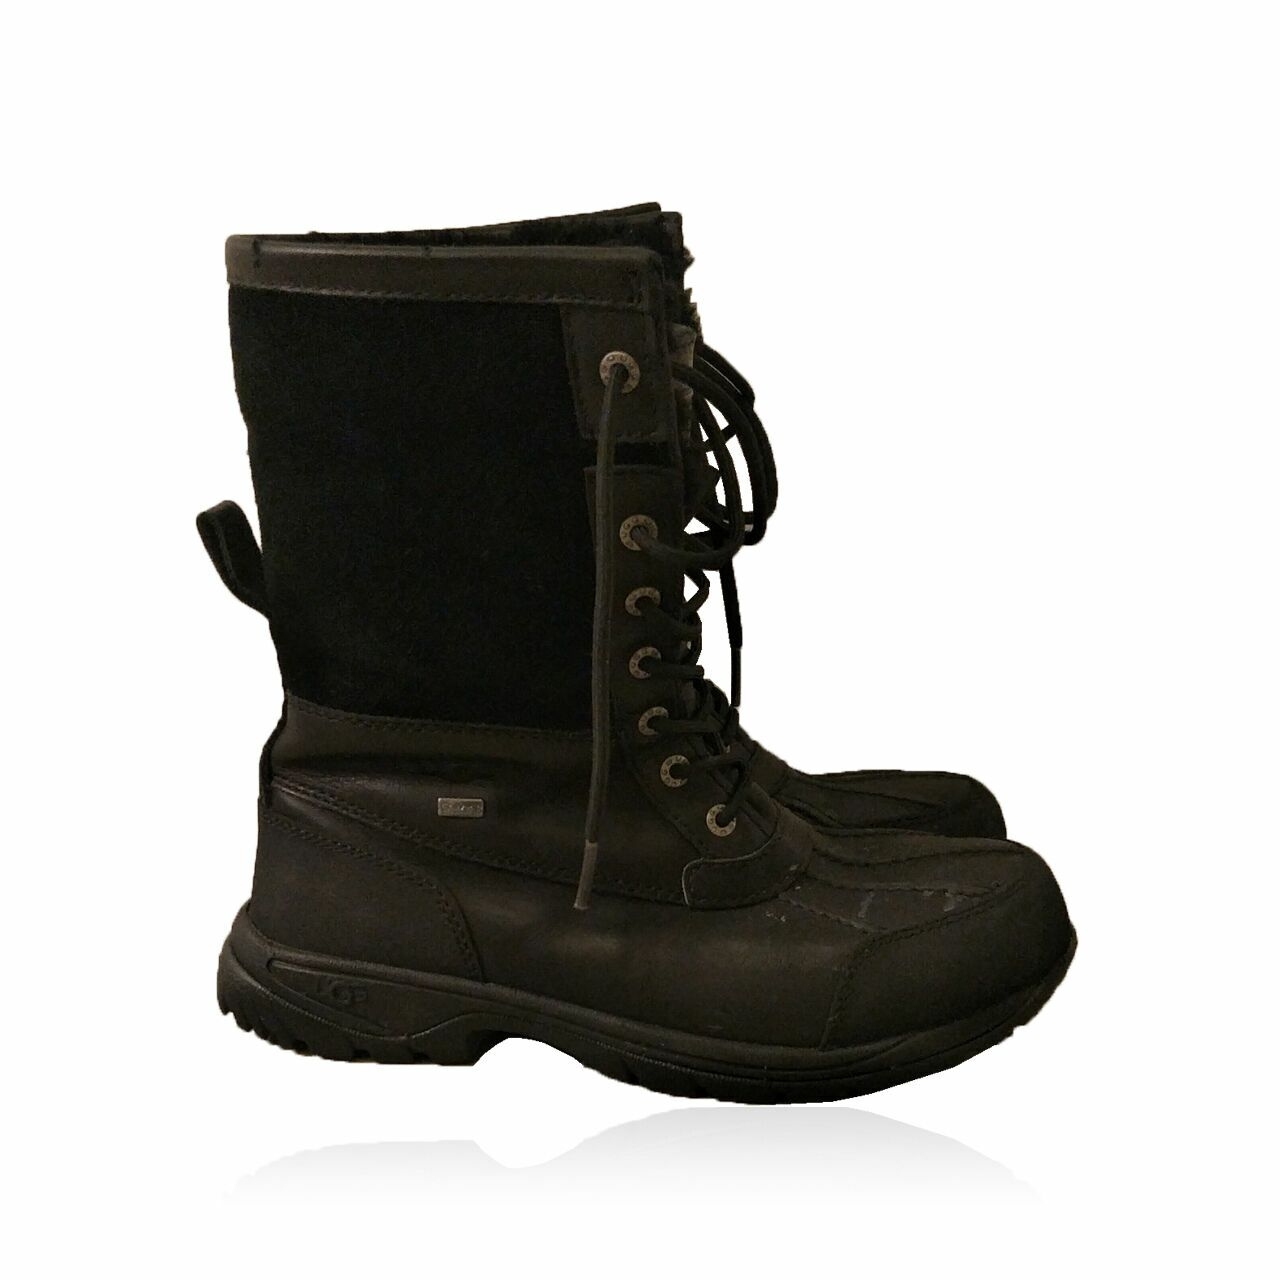 Ugg Australia Black Boots